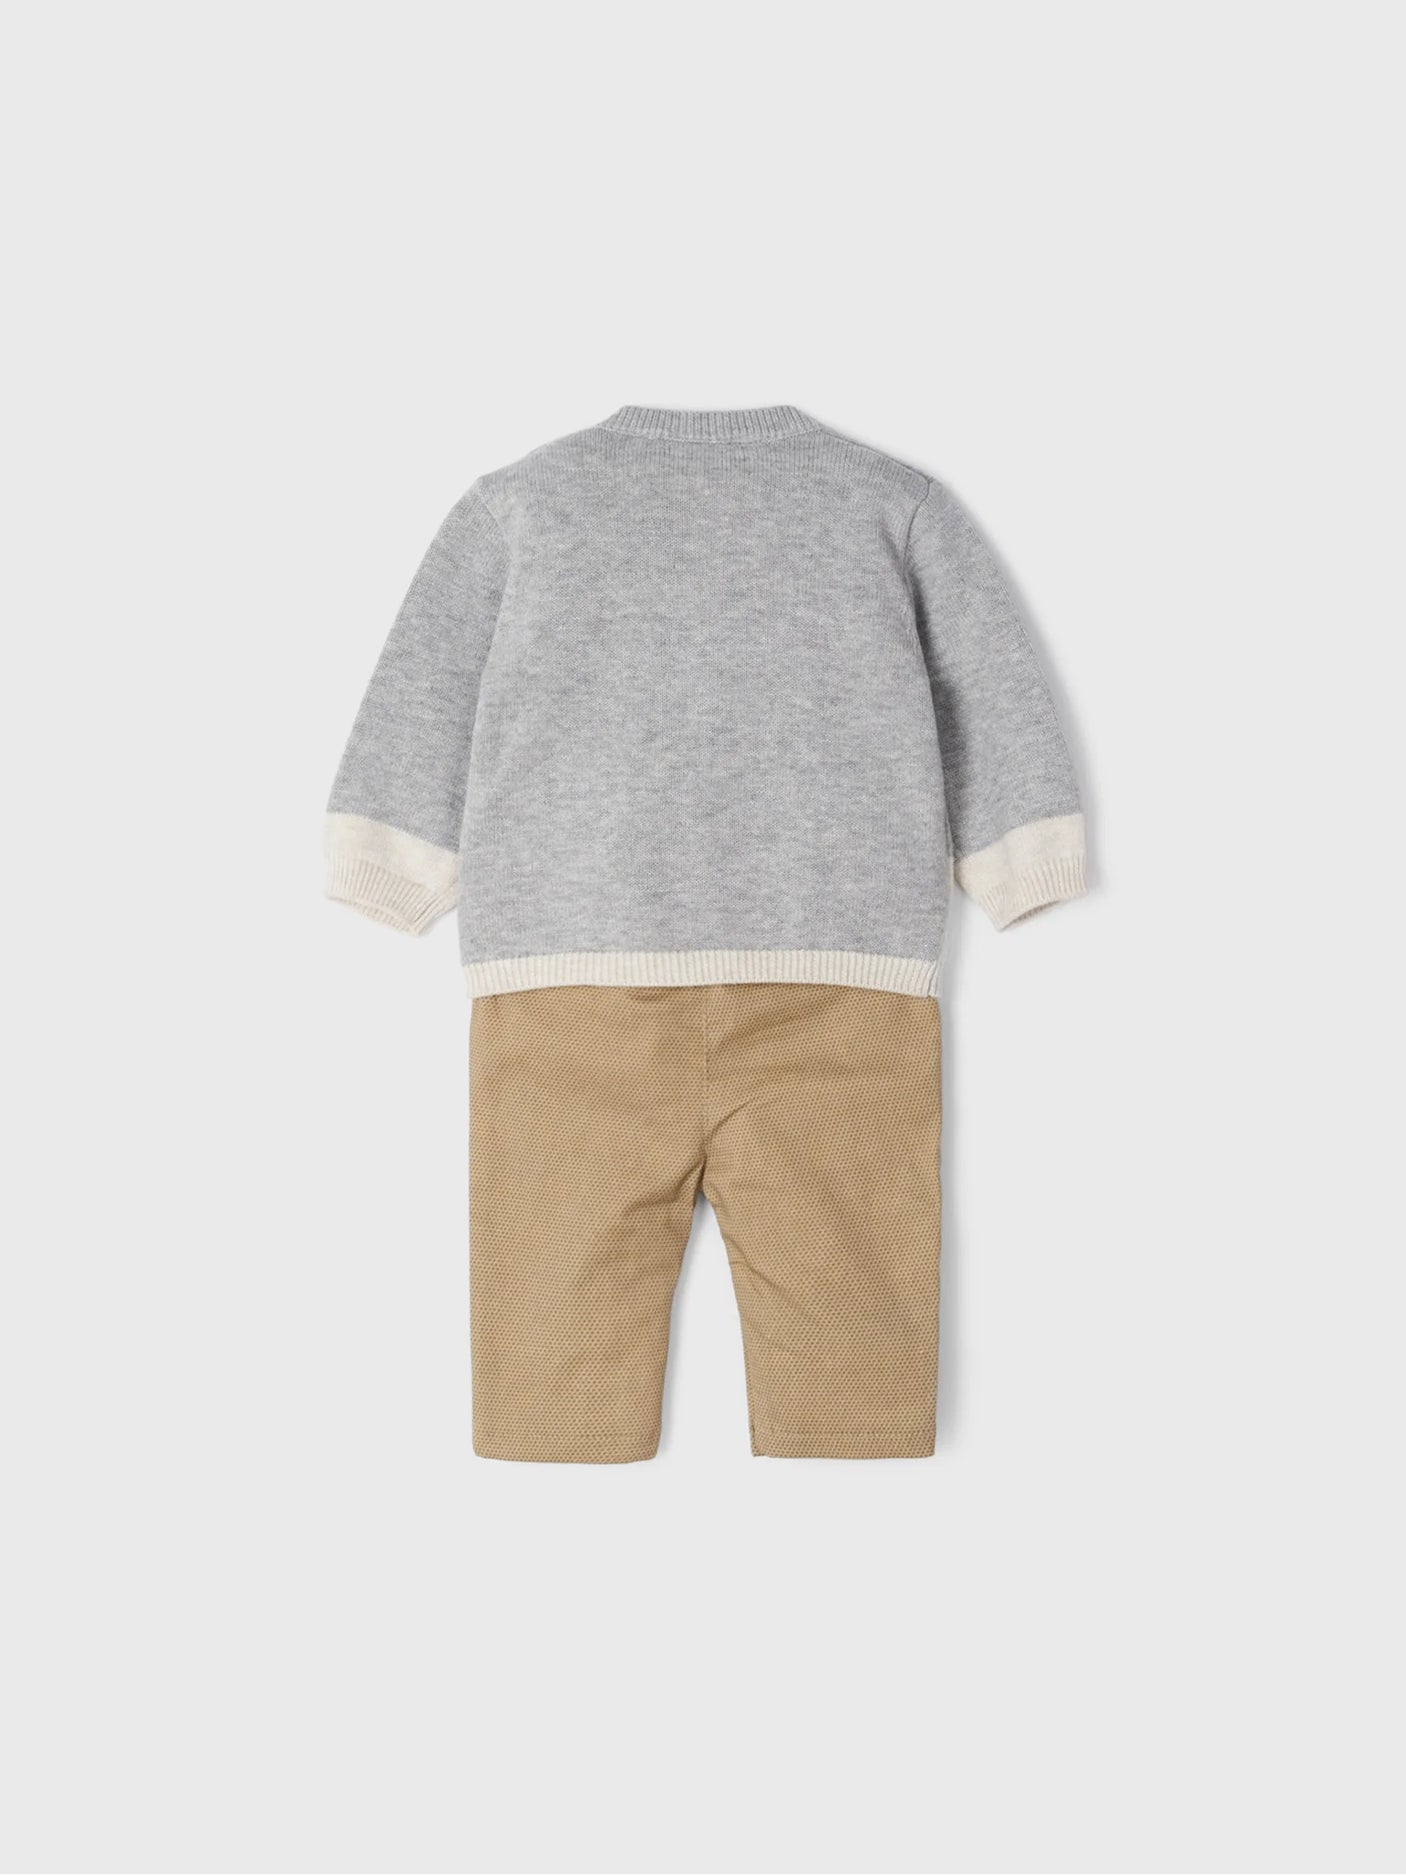 Baby Boy Sweater & Long Trouser Set - Luna Vig | Mayoral - Jenni Kidz